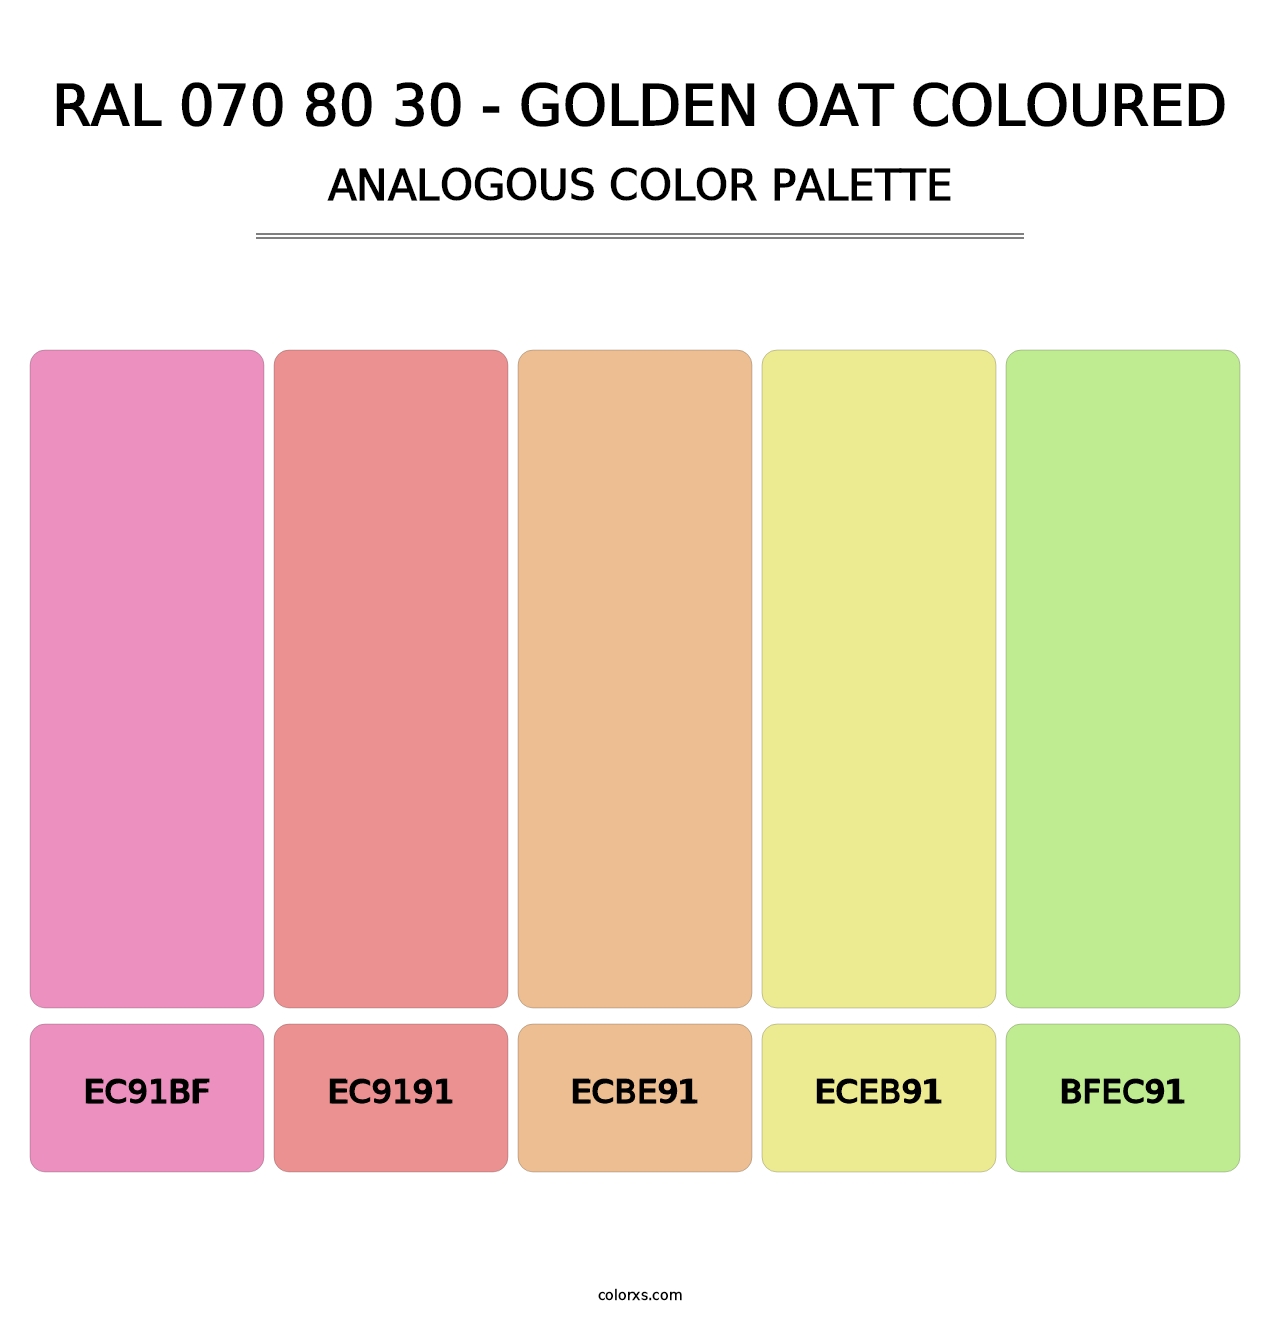 RAL 070 80 30 - Golden Oat Coloured - Analogous Color Palette